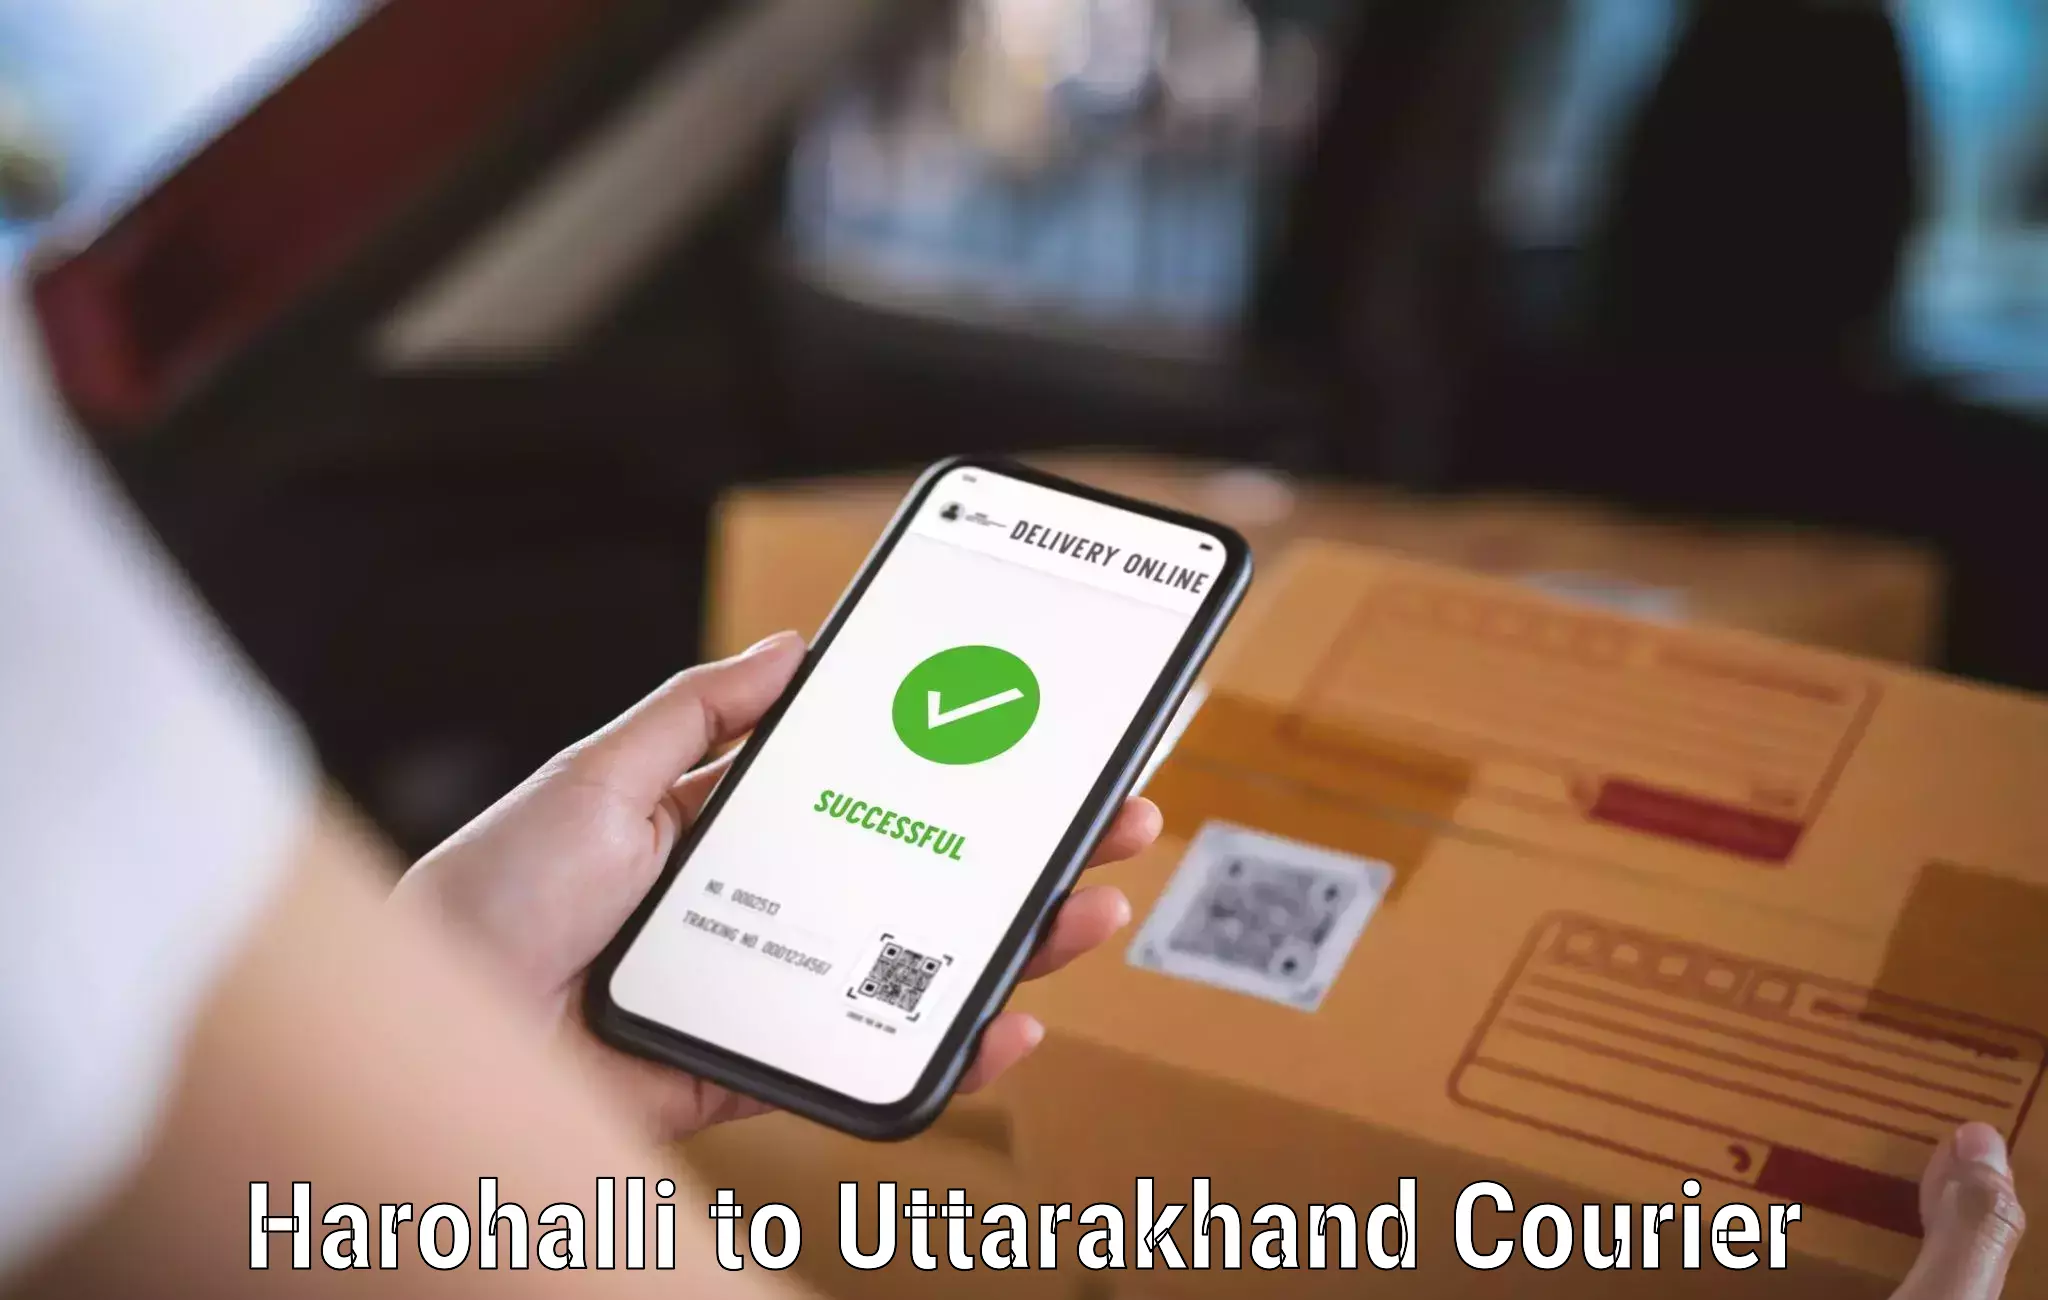 Nationwide parcel services Harohalli to Rishikesh